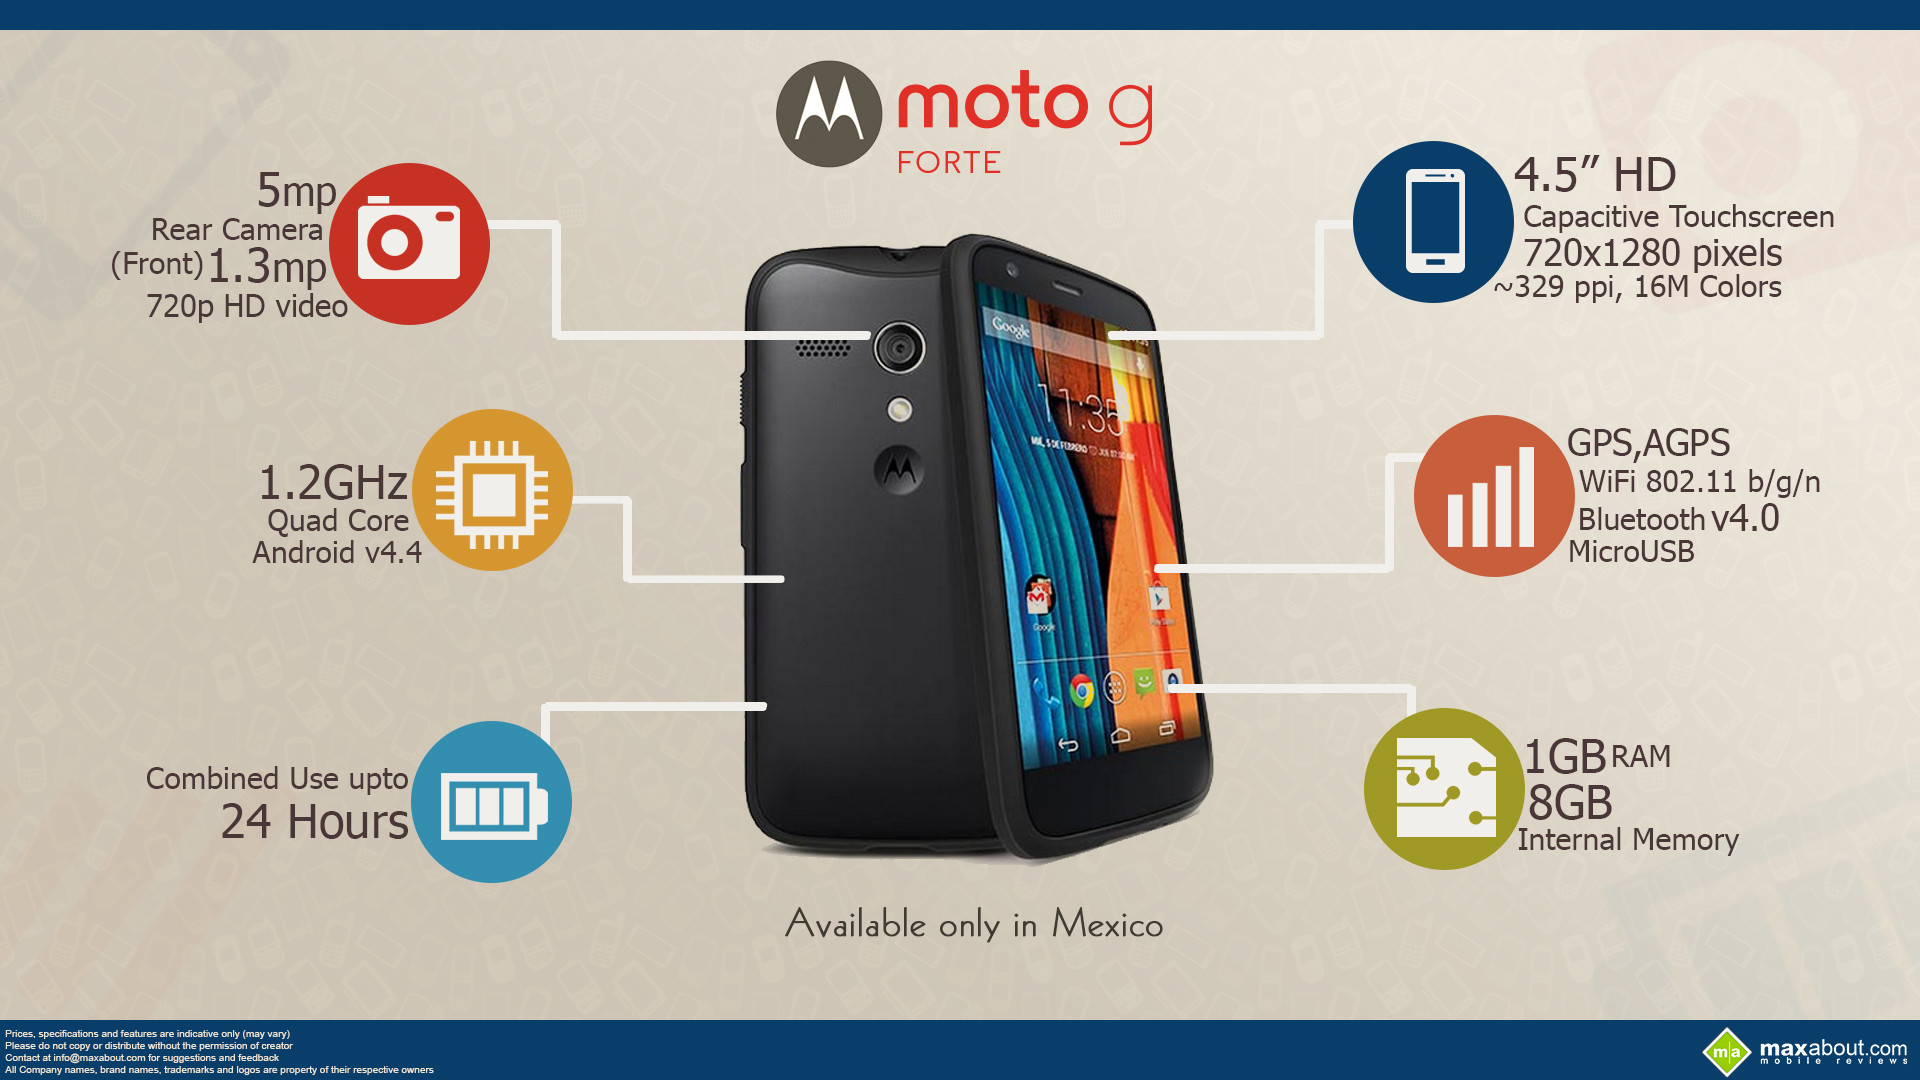 1920x1080 Motorola Moto G Forte Amazing Android Smartphone 